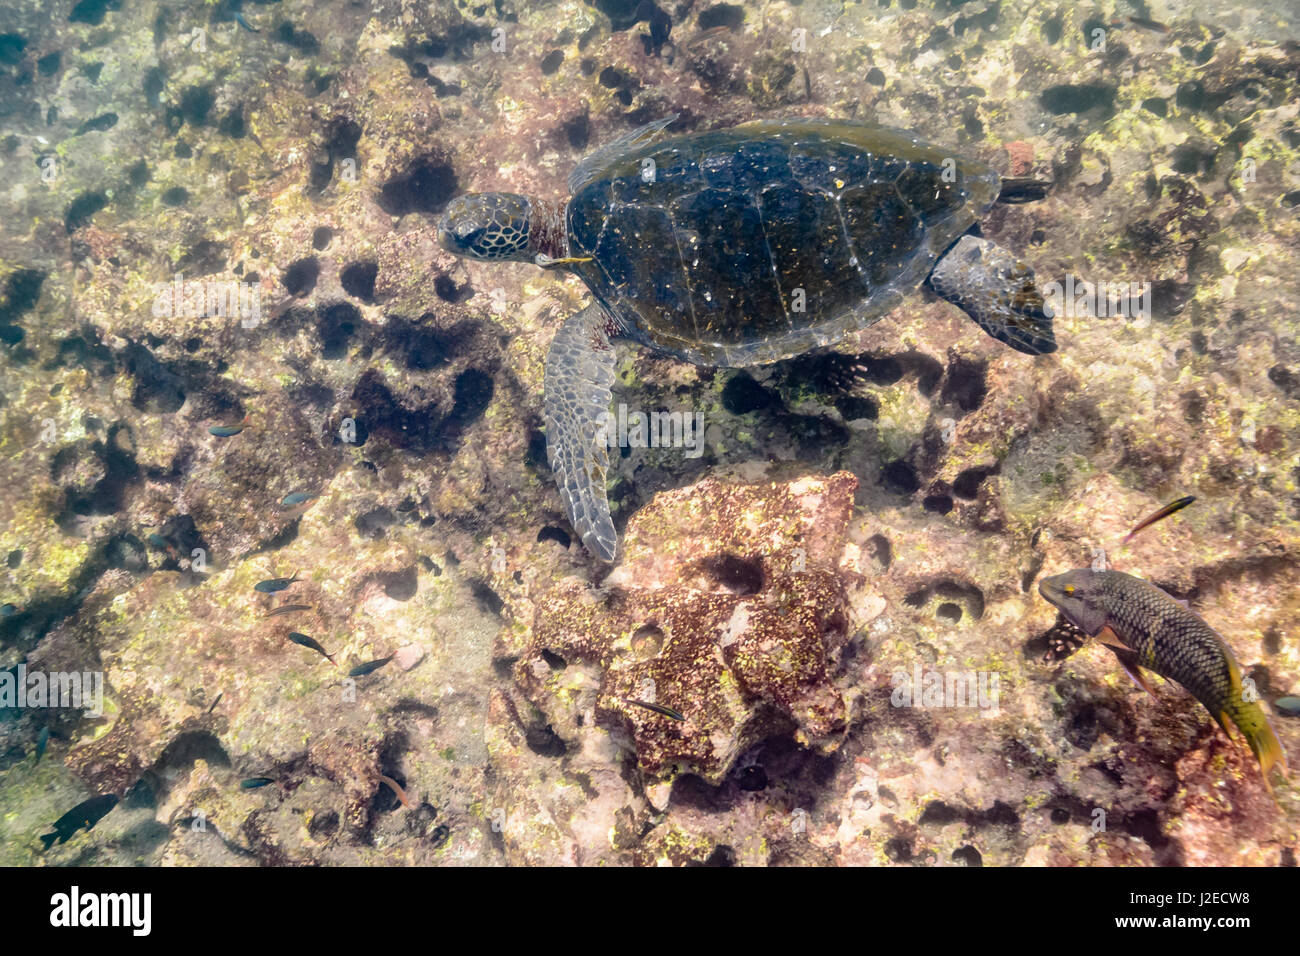 A Green Sea Turtle(Chelonia mydas) swimming underwater while a Mexican hogfish (Bodianus diplotaenia) follows. Galapagos Islands, Ecuador. Stock Photo